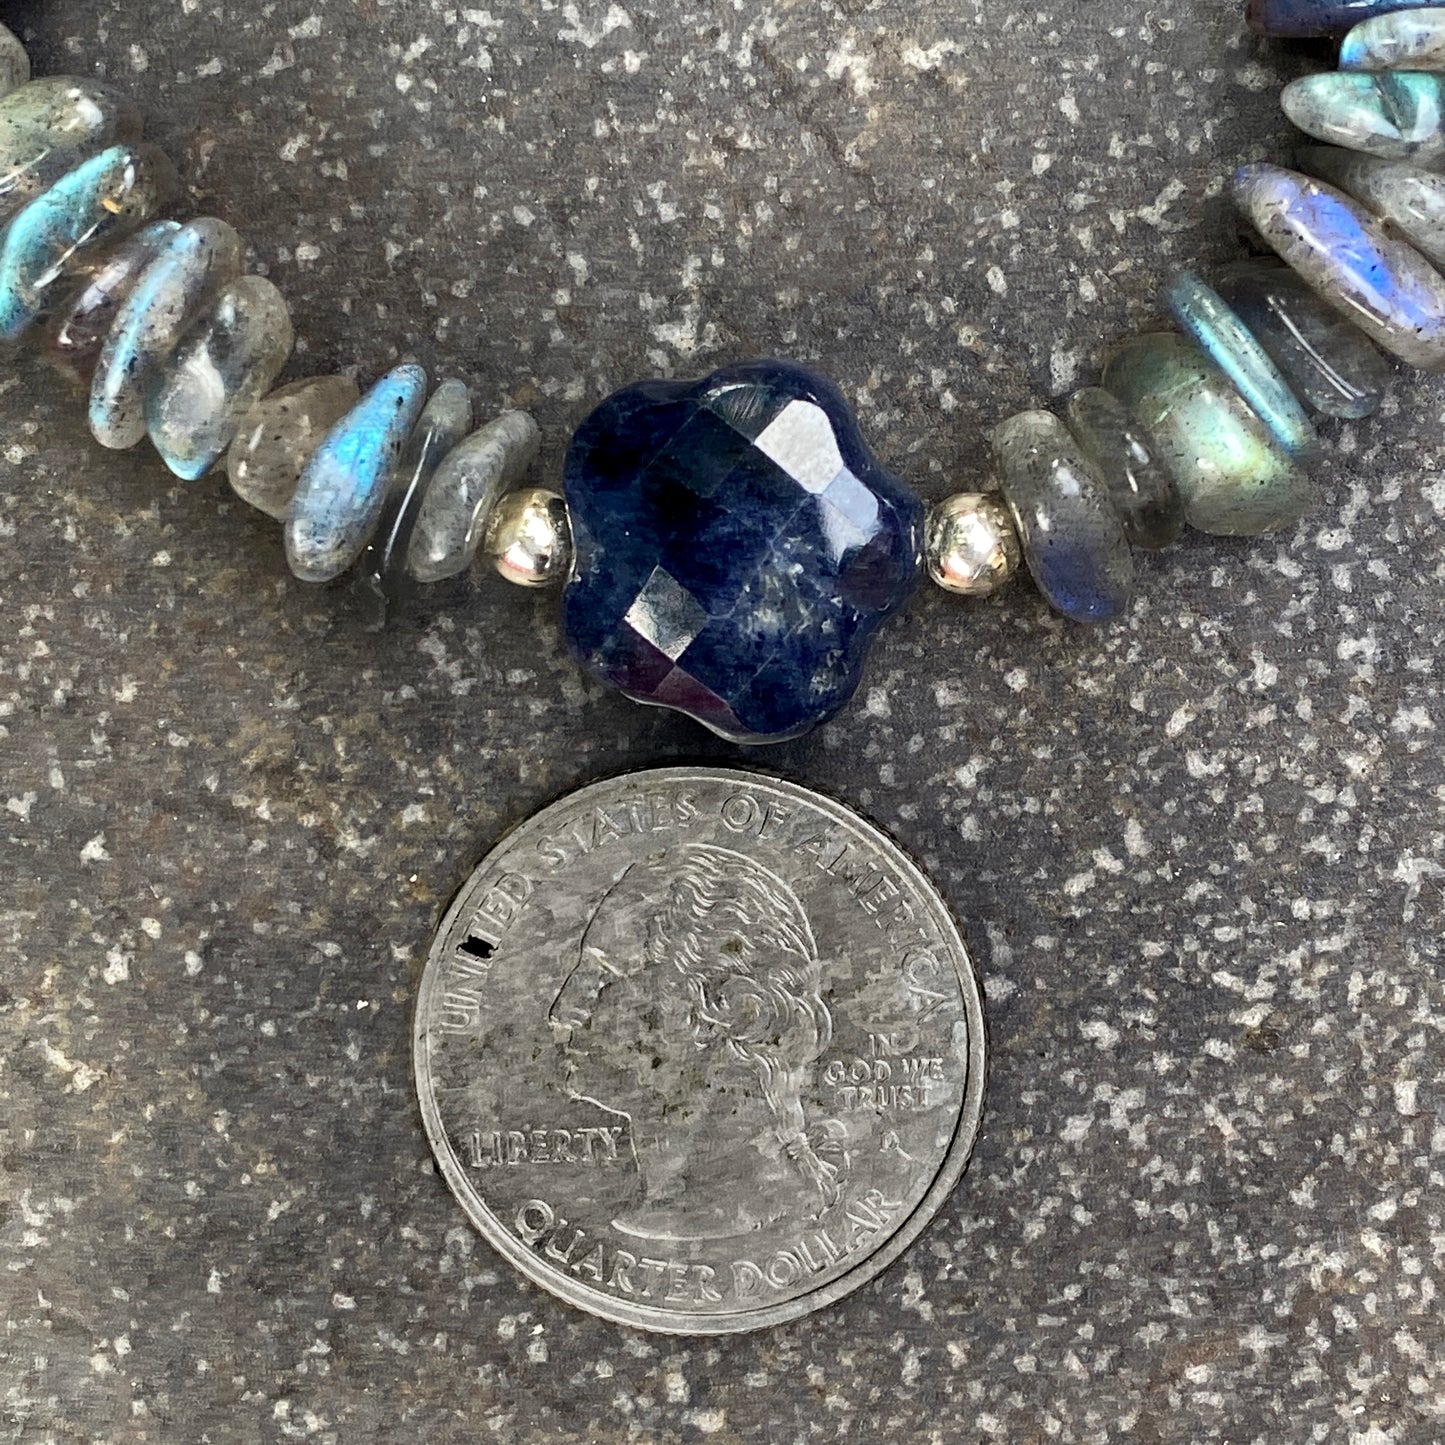 Blue Sapphire and Labradorite Bracelet